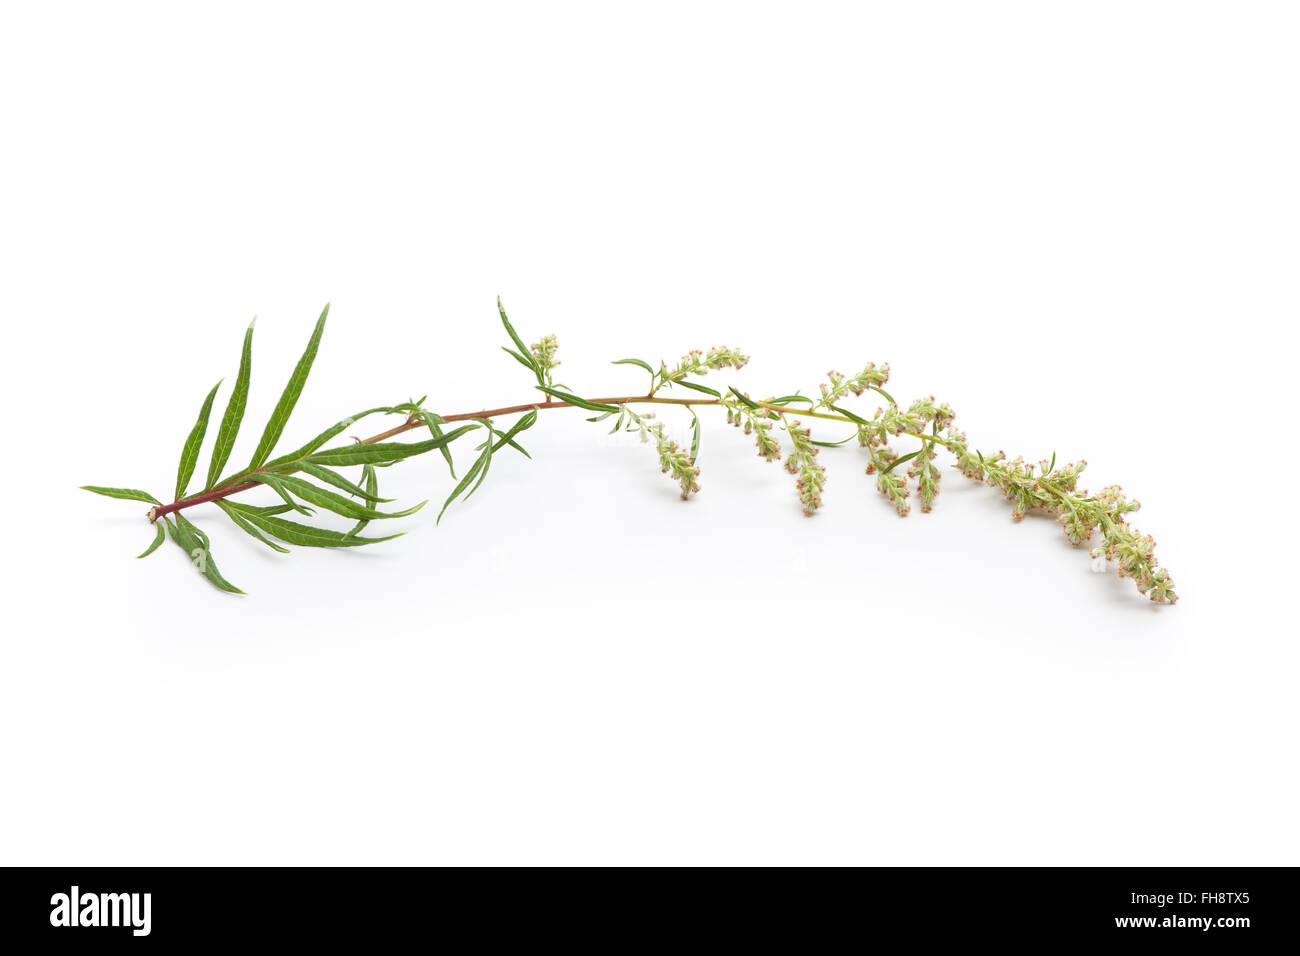 Ramita od Mugwort fresca, Artemisia vulgaris, la medicina herbaria sobre fondo blanco. Foto de stock